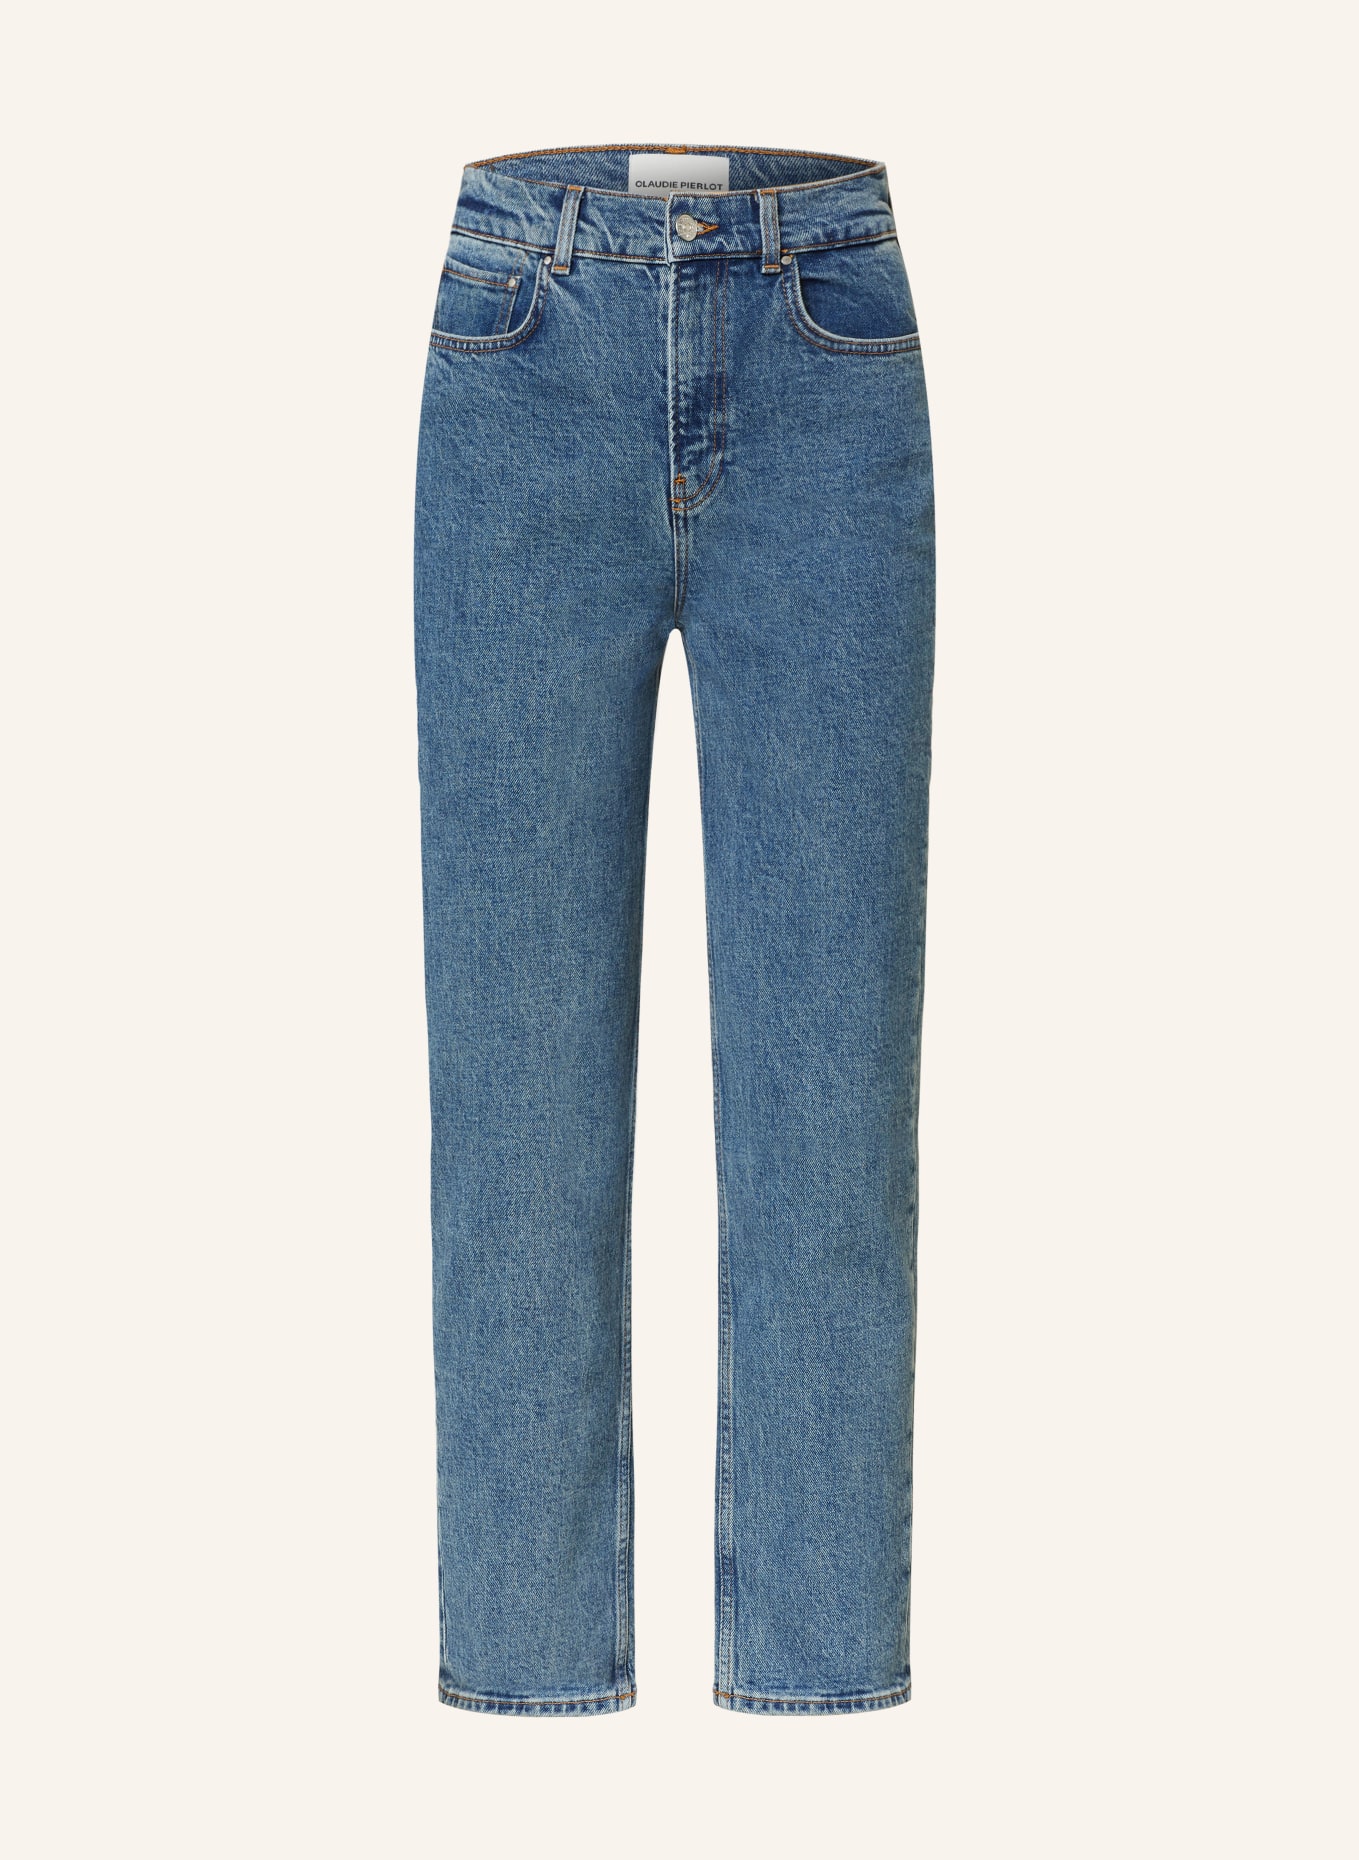 CLAUDIE PIERLOT Jeans, Farbe: J010 LIGHT DENIM (Bild 1)